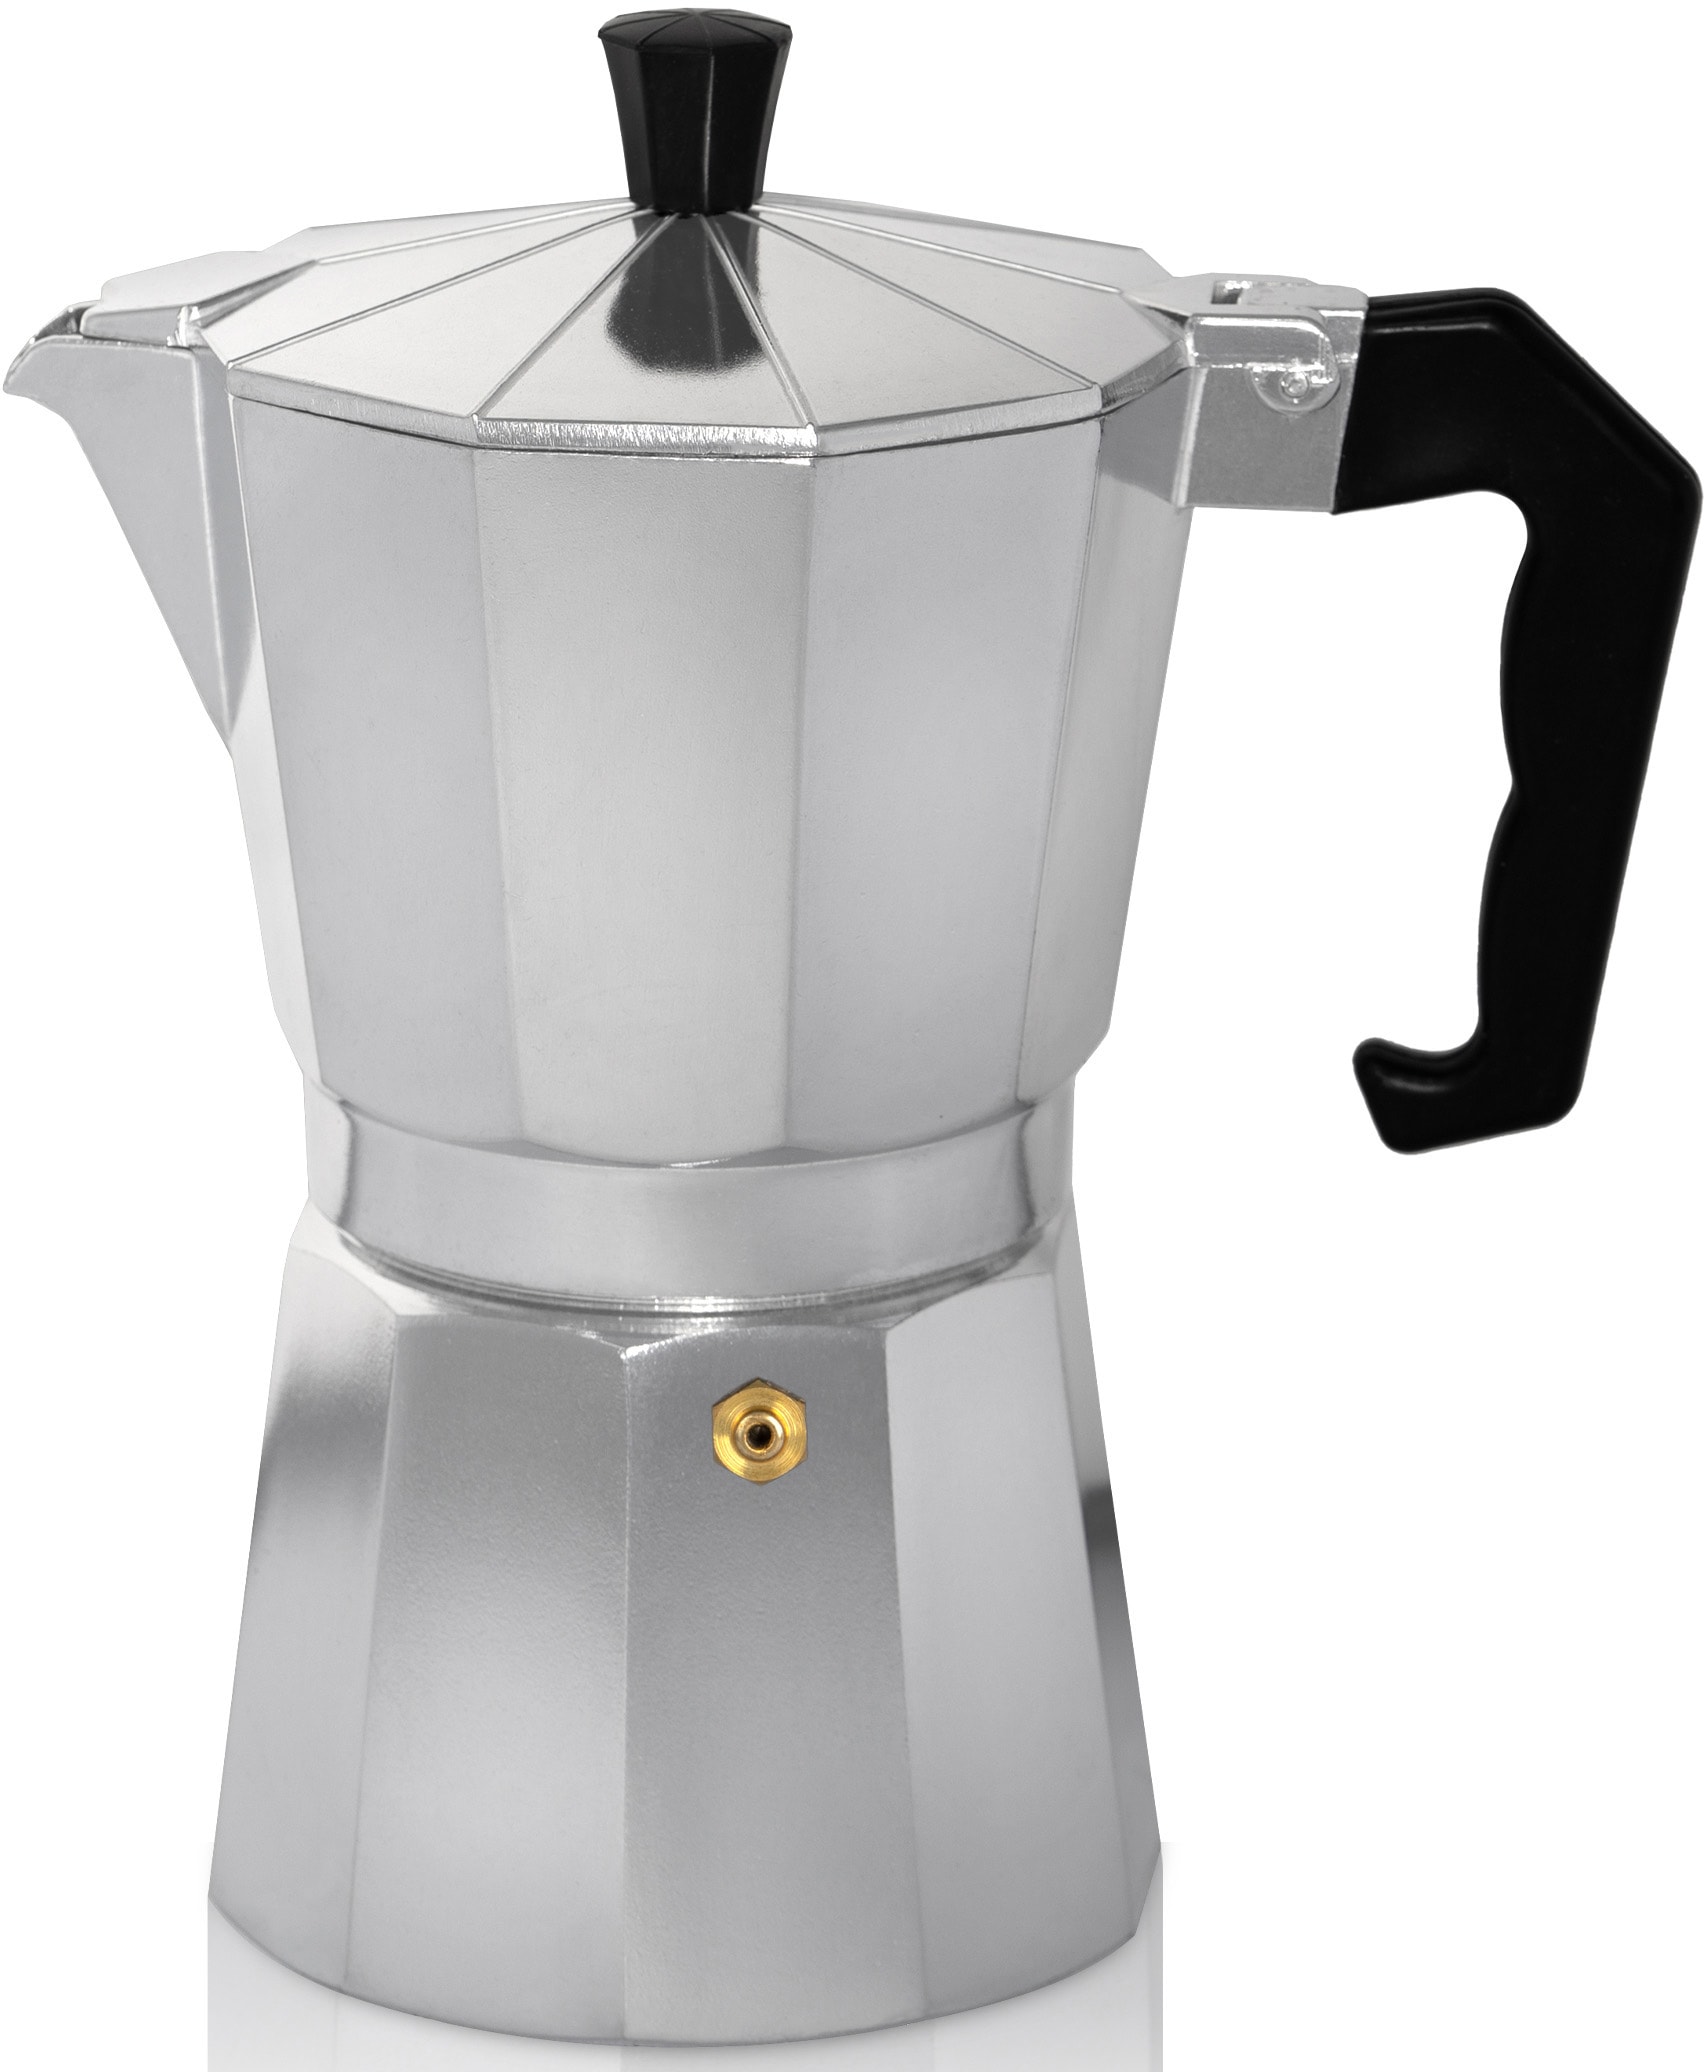 Espressokocher »Italiano«, 0,1 l Kaffeekanne, traditionell italienisch, aus Aluminium,...